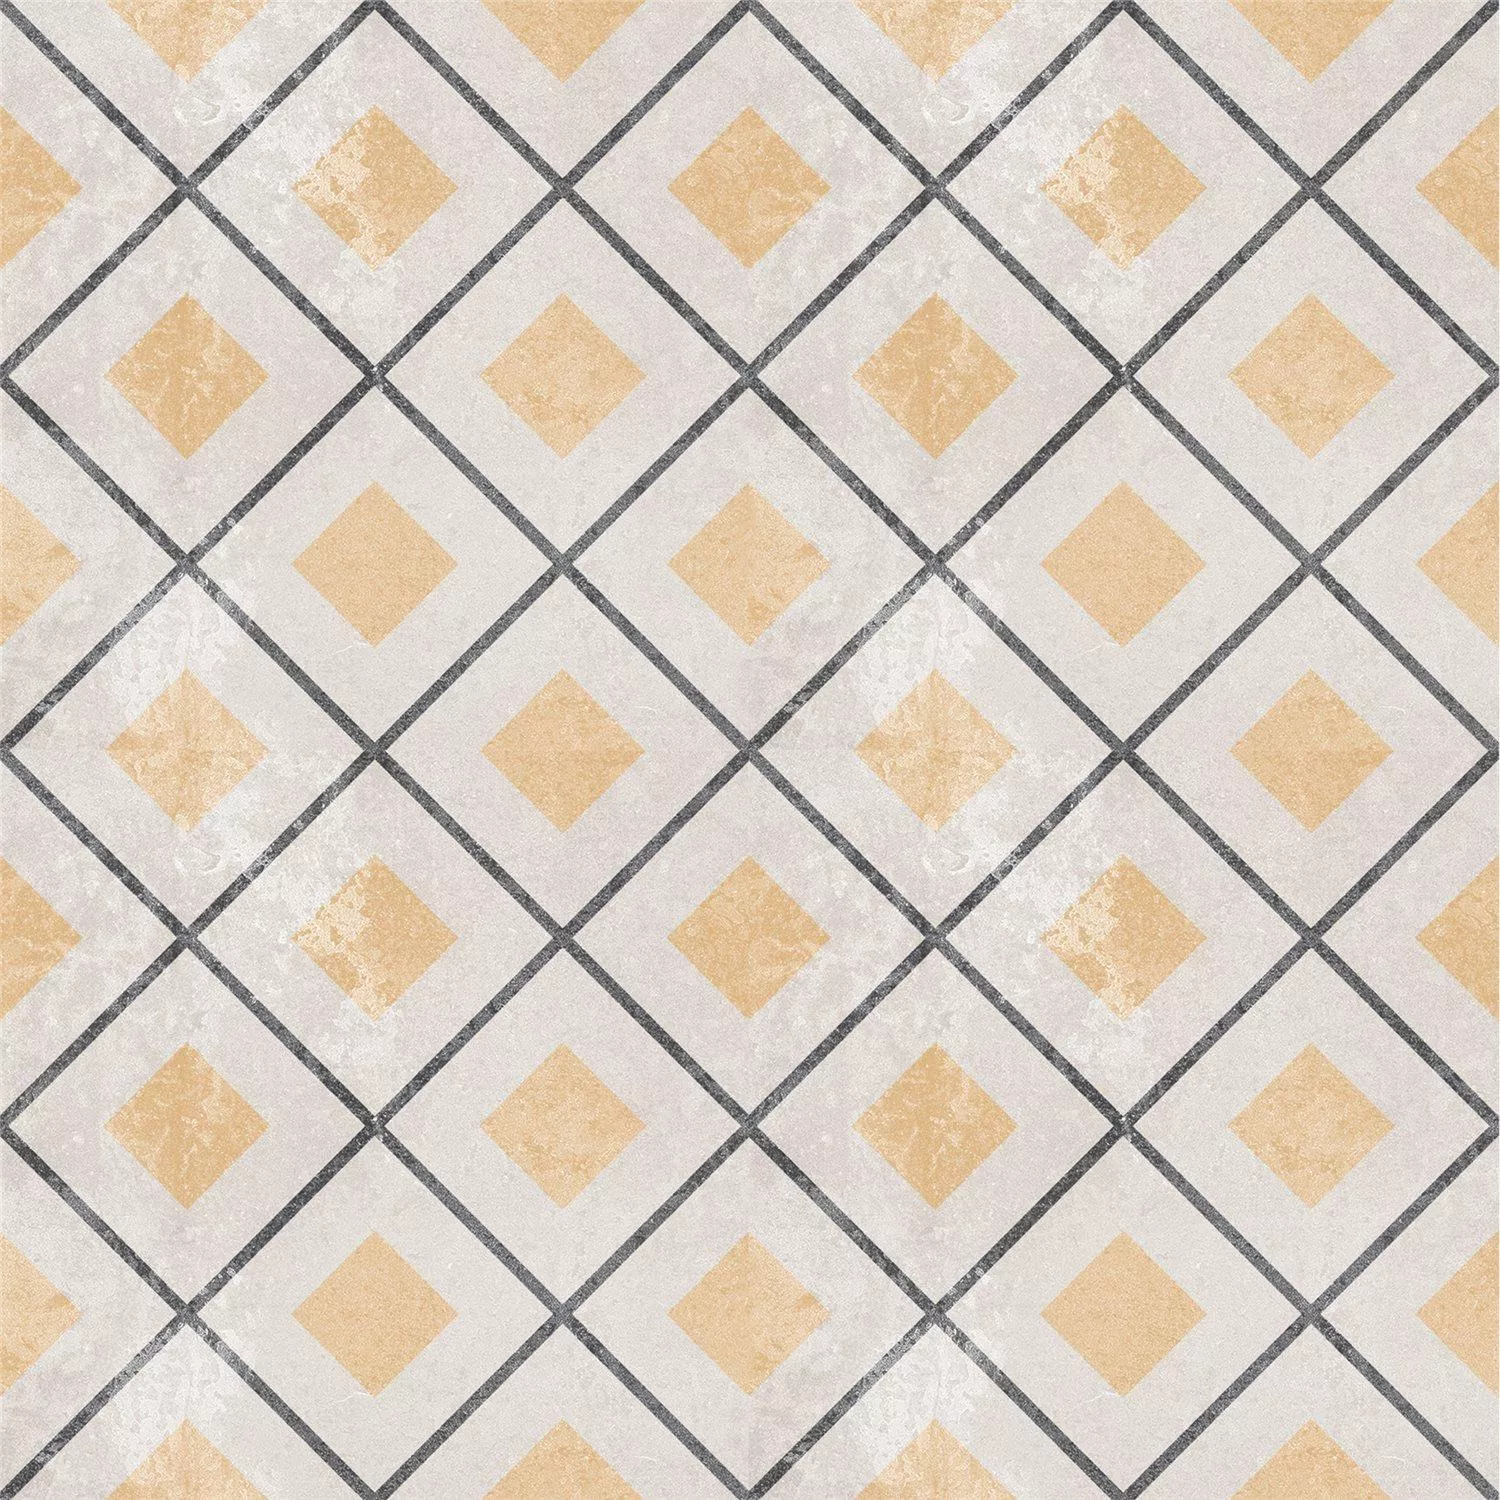 Sample Cement Tiles Retro Optic Gris Floor Tiles Cubero 18,6x18,6cm